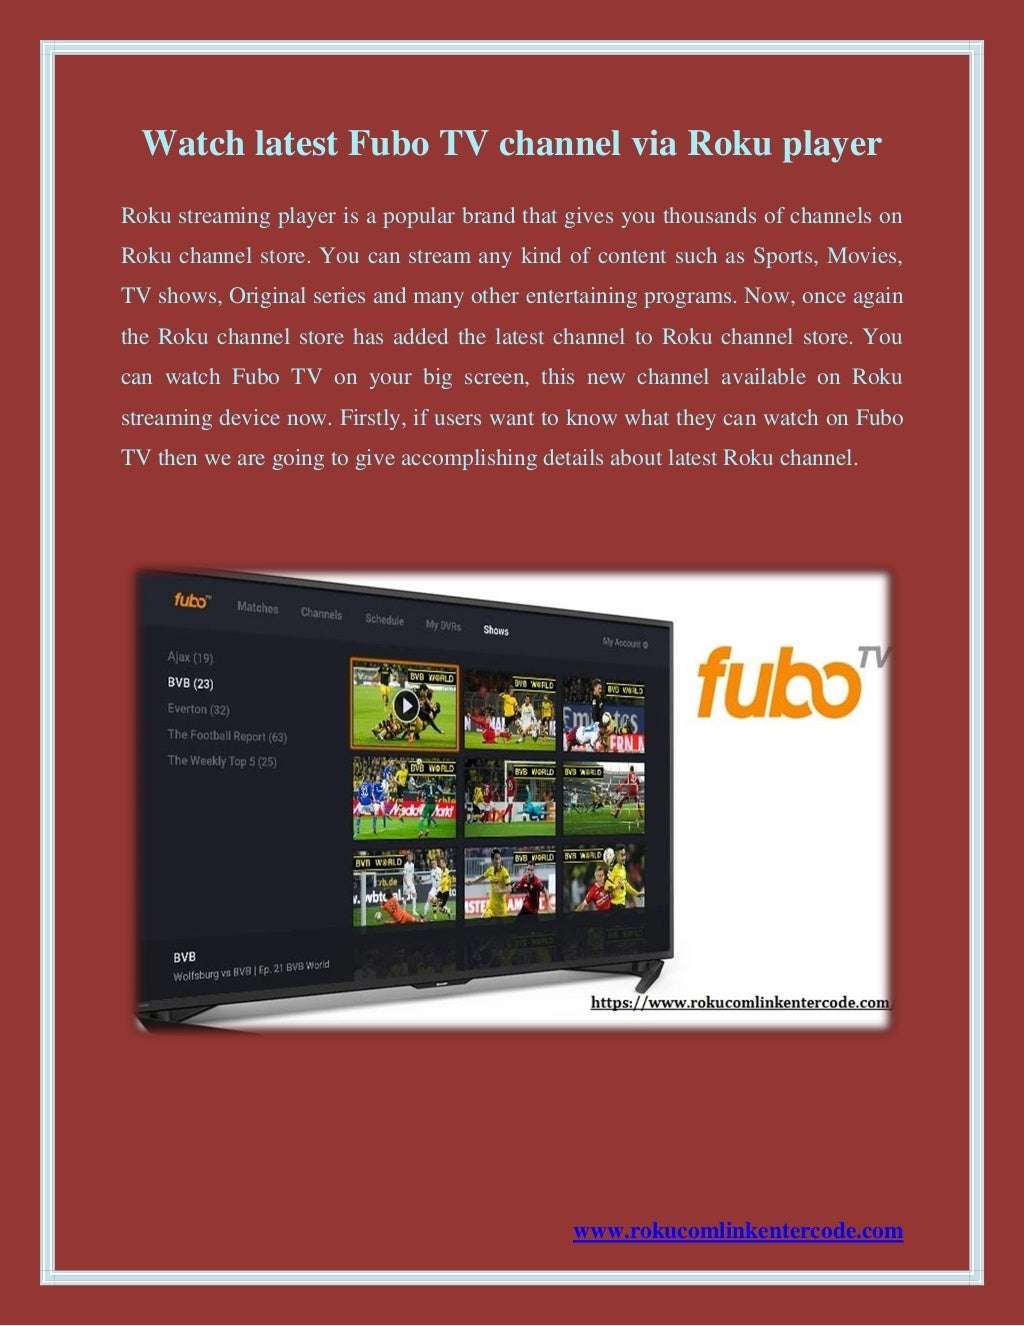 Watch Latest Fubo TV Channel via Roku Player